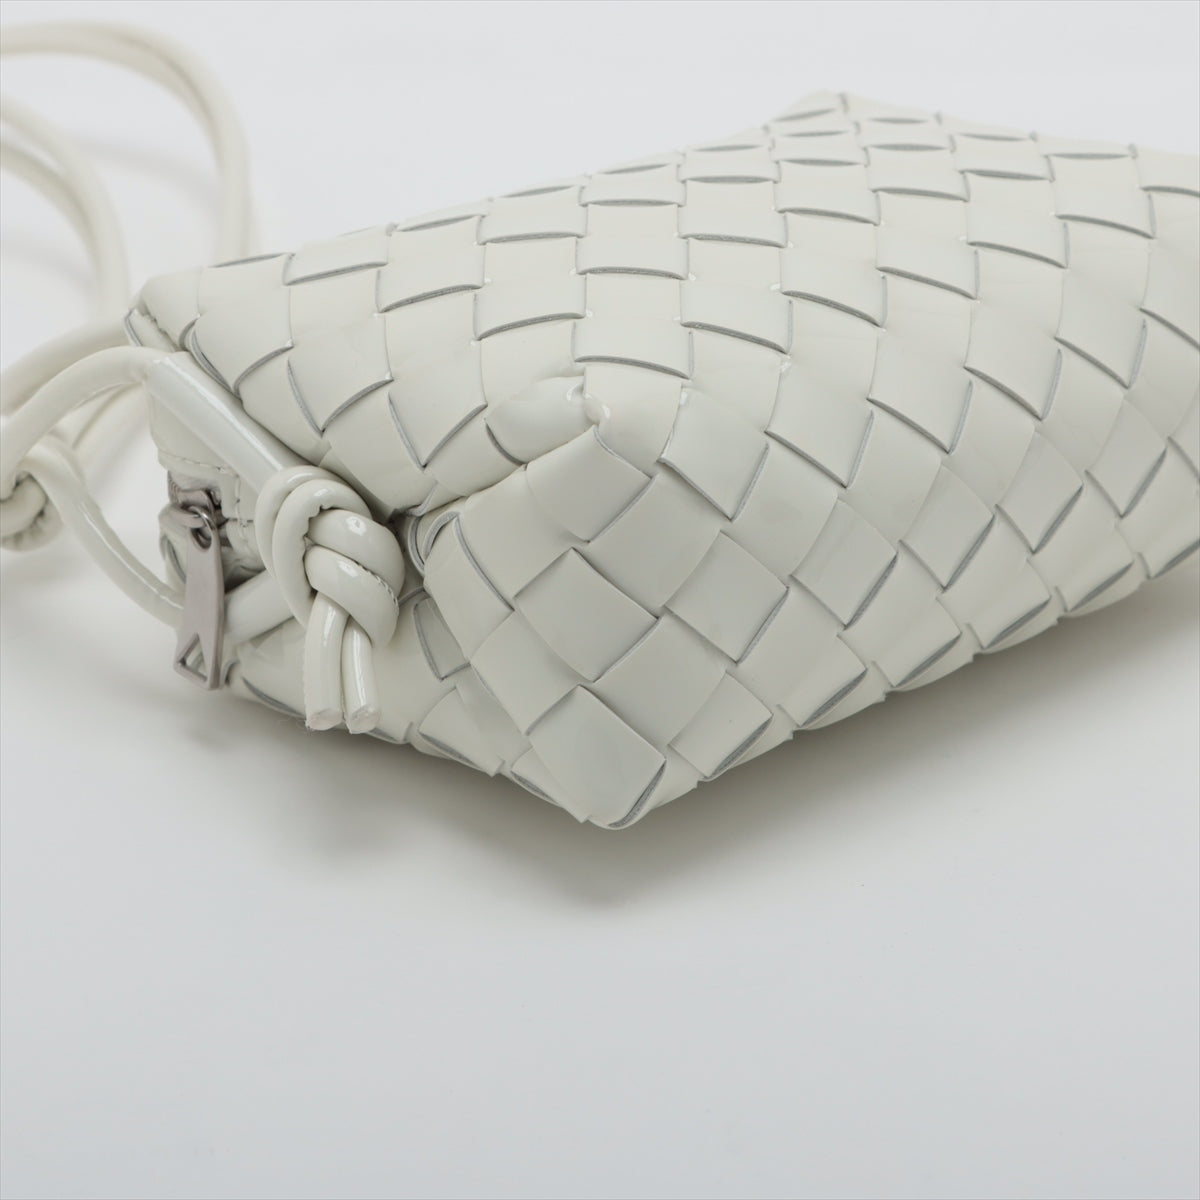 Bottega Veneta Intrecciato Patent leather Shoulder bag White